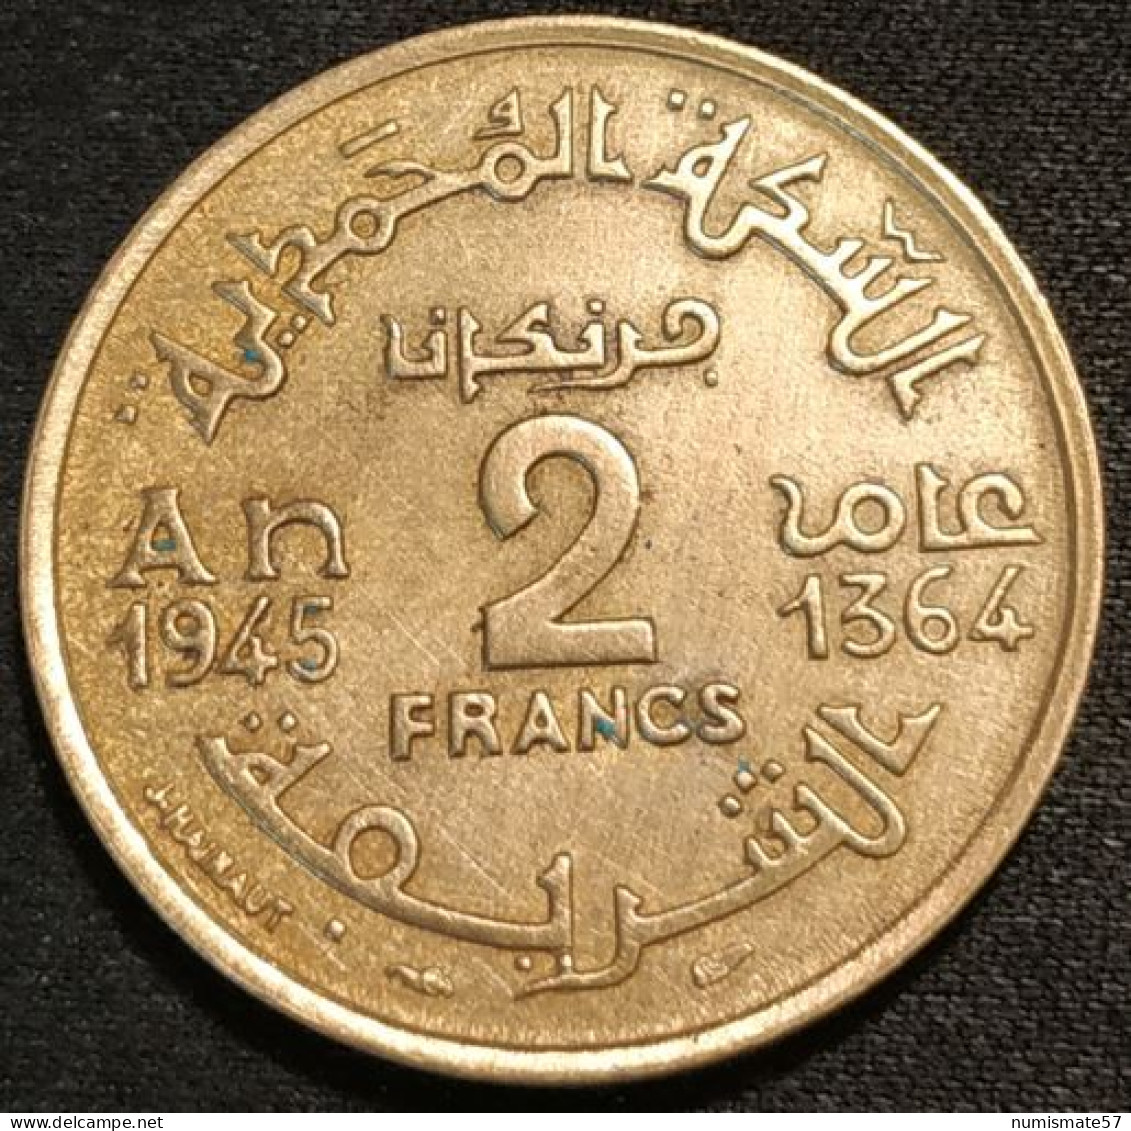 MAROC - MOROCCO - 2 FRANCS 1945 ( 1364 ) - Mohammed V - KM 42 - Maroc